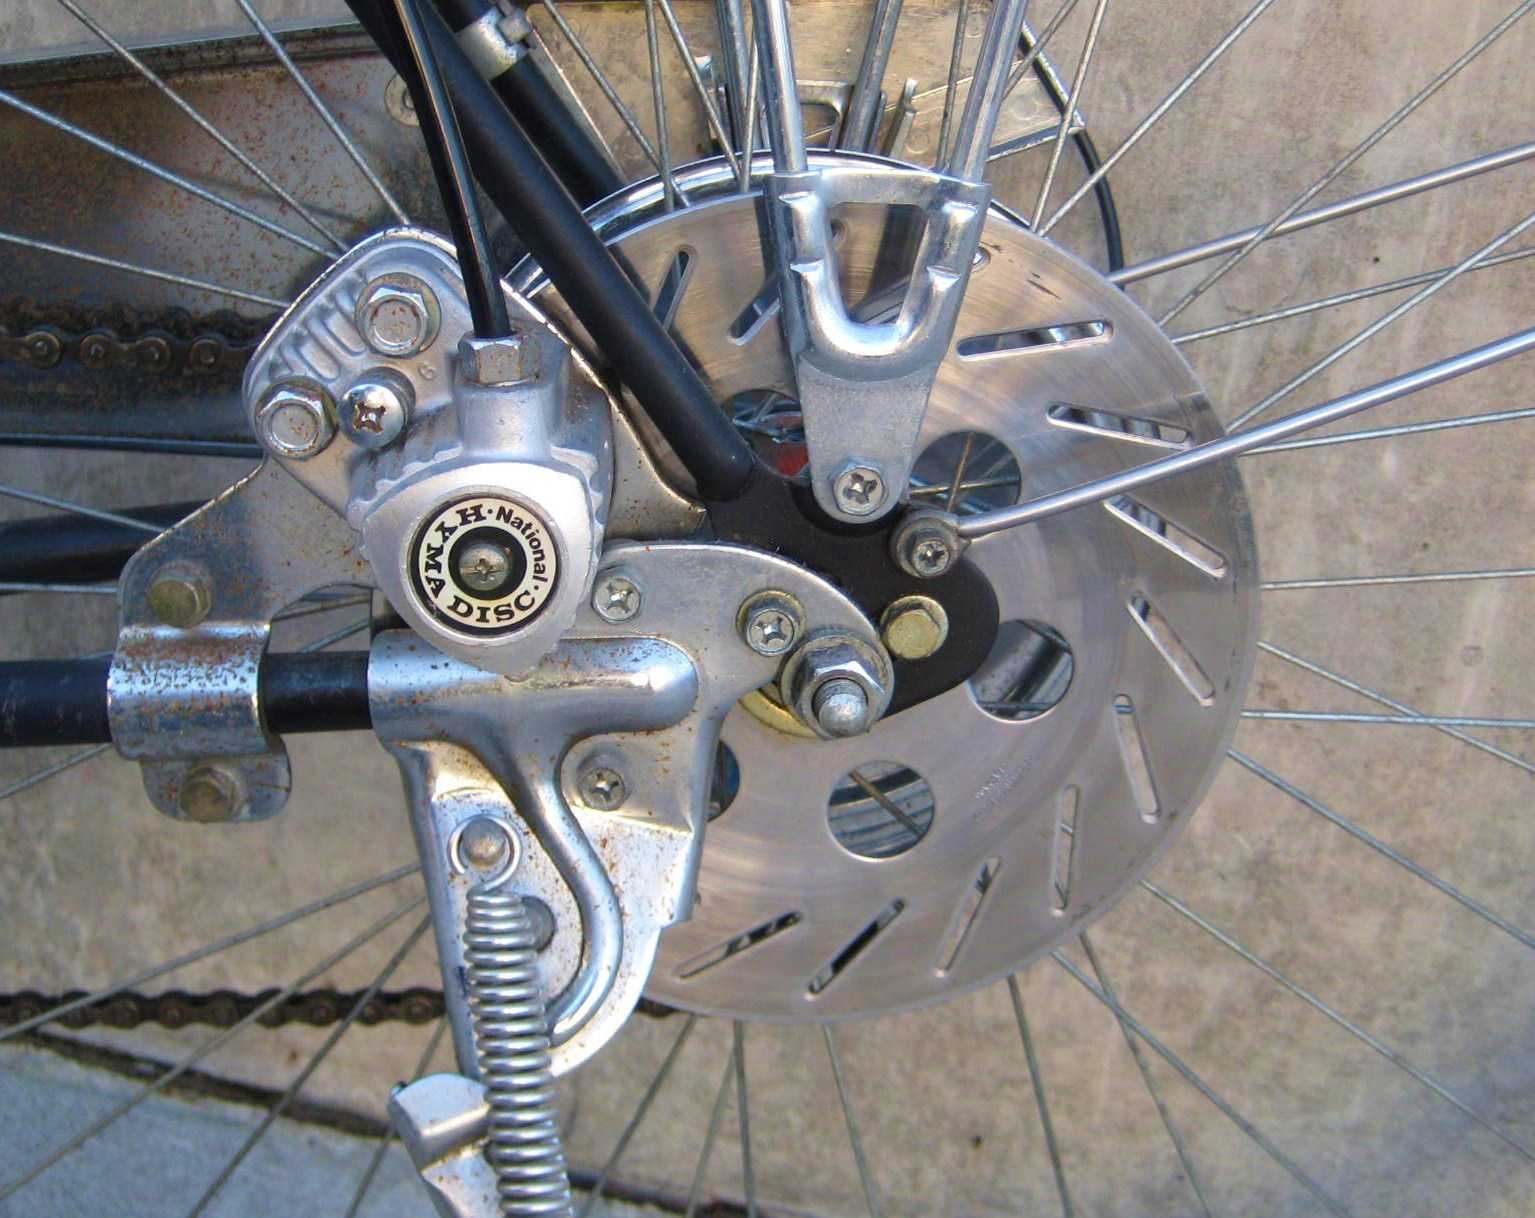 Тормозной диск на колесе велосипеда. ХВЗ кронштейн для дисковых тормозов. Дисковый тормоз велосипеда Comanche Classic. Дисковые тормоза на ХВЗ. Крепление для дискового тормоза на велосипед ХВЗ.